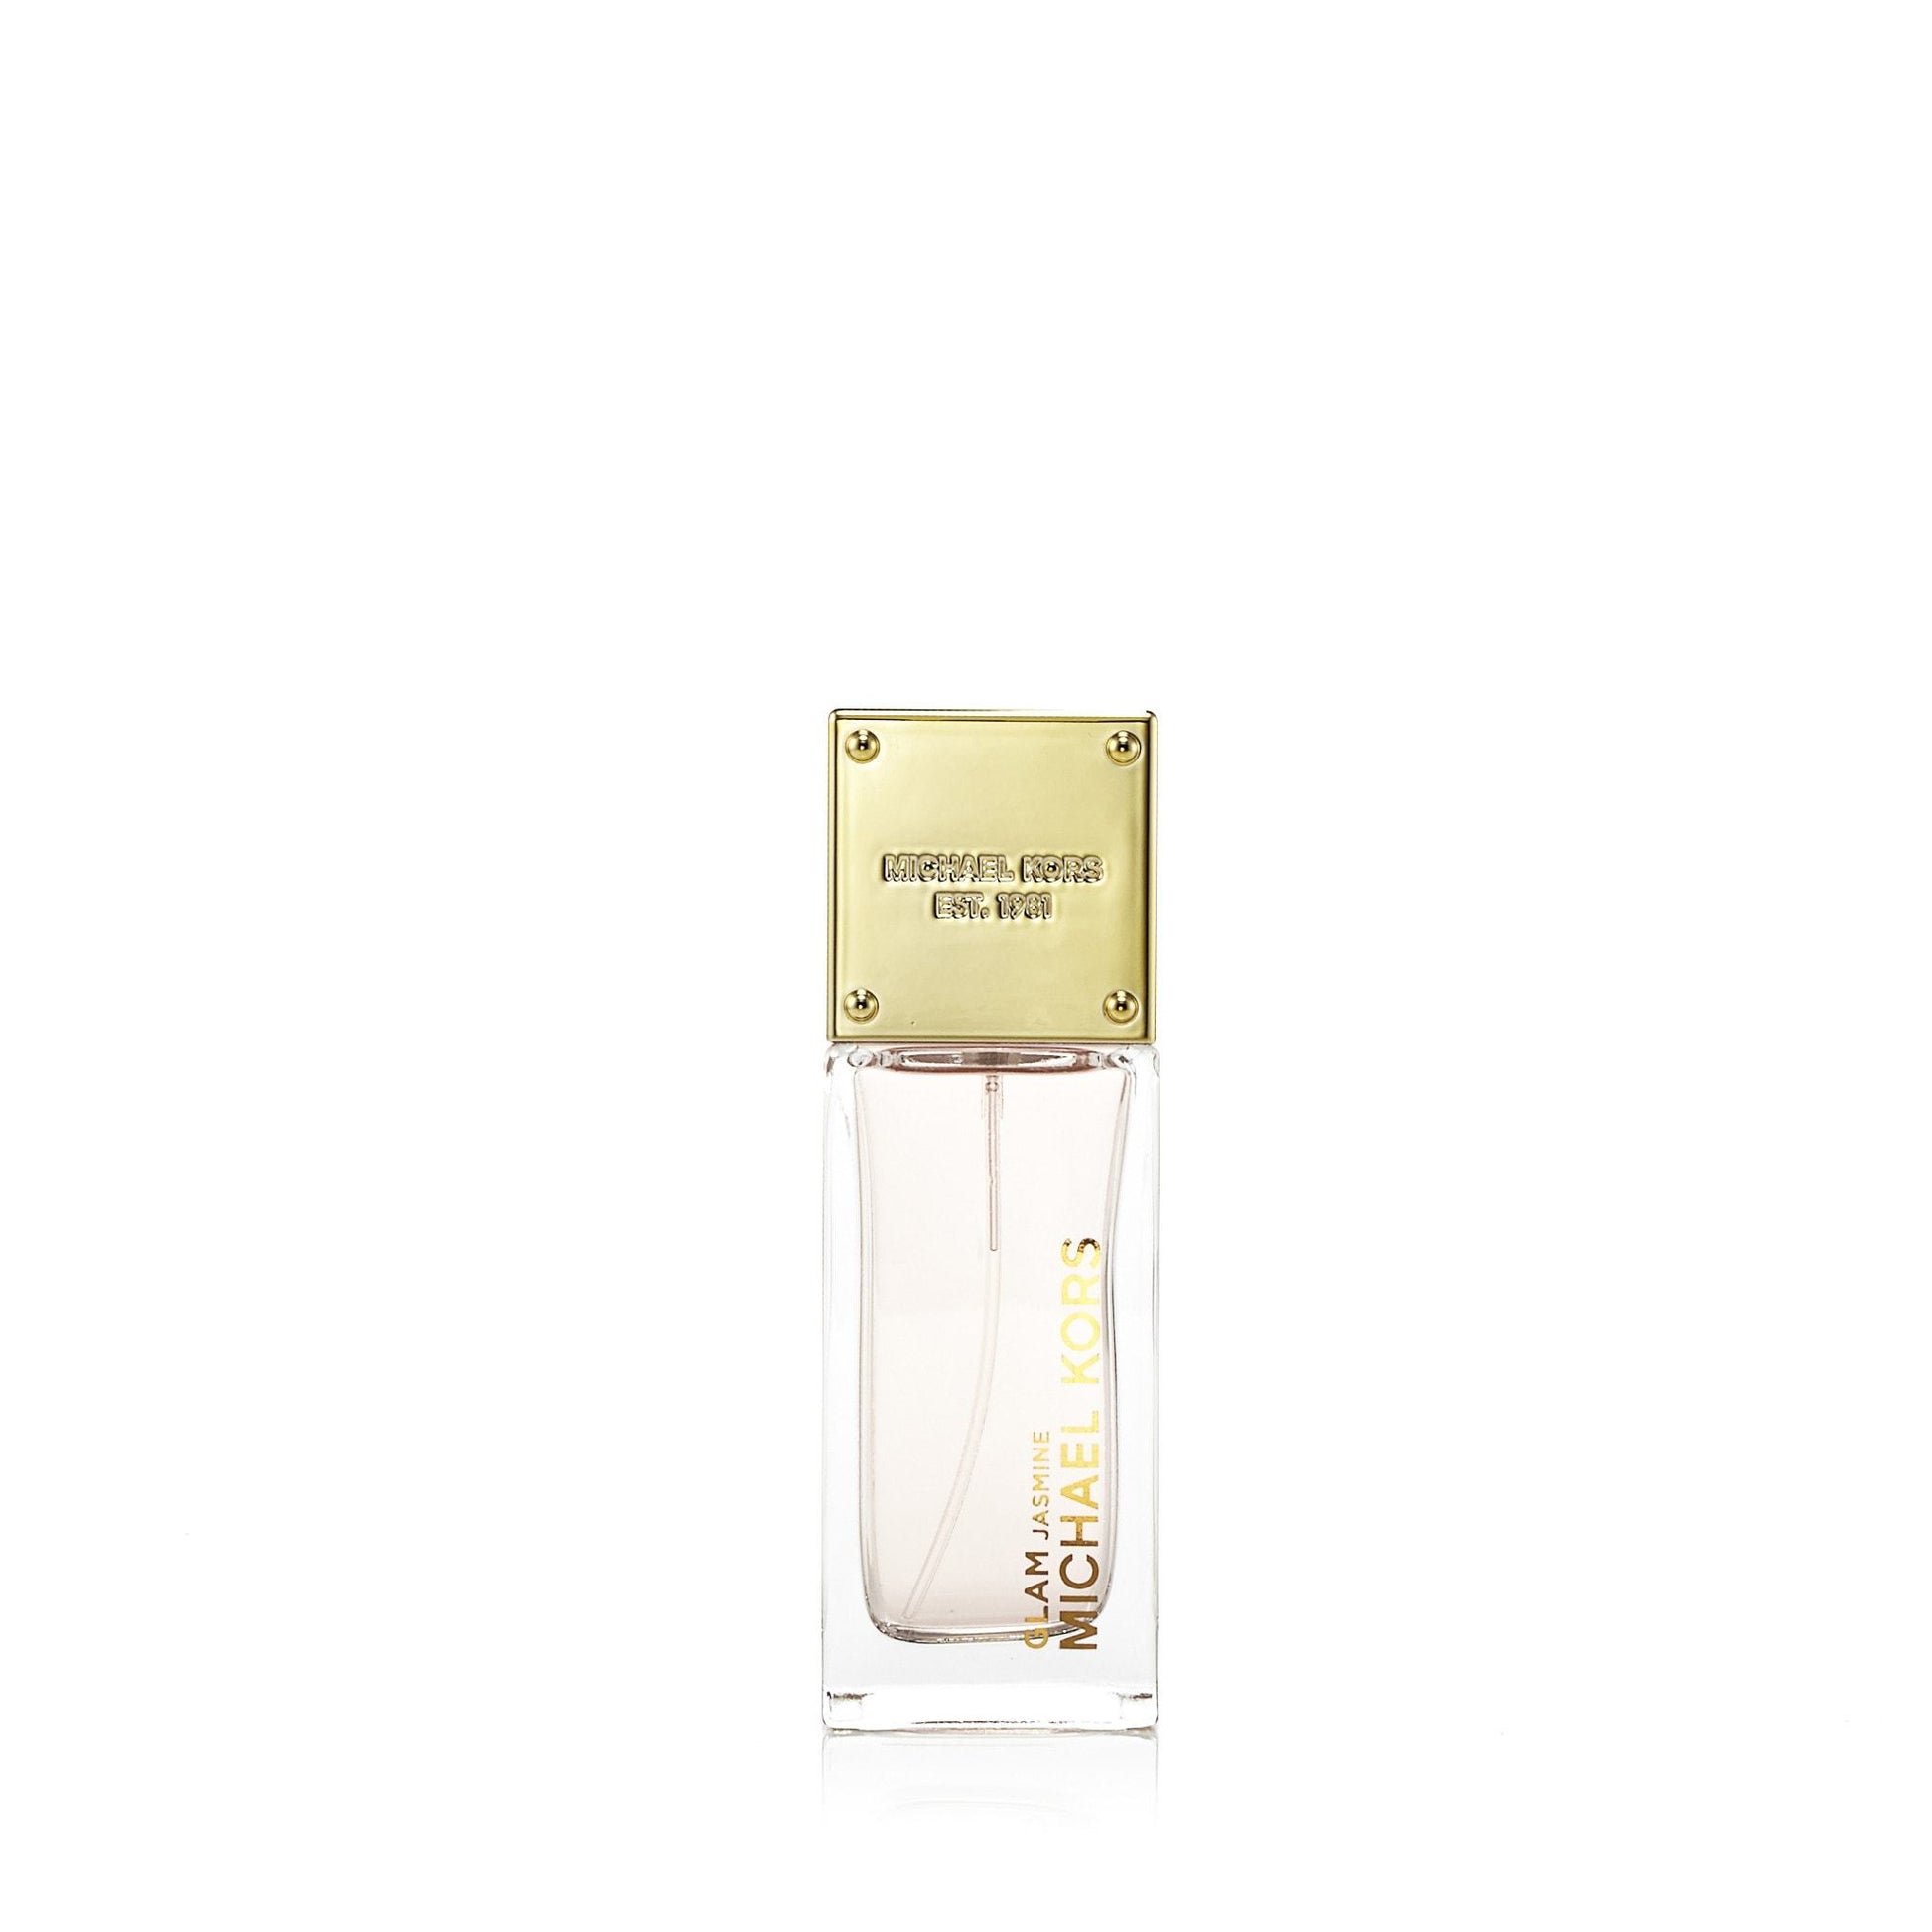 Glam Jasmine Eau de Parfum Spray for Women by Michael Kors, Product image 3